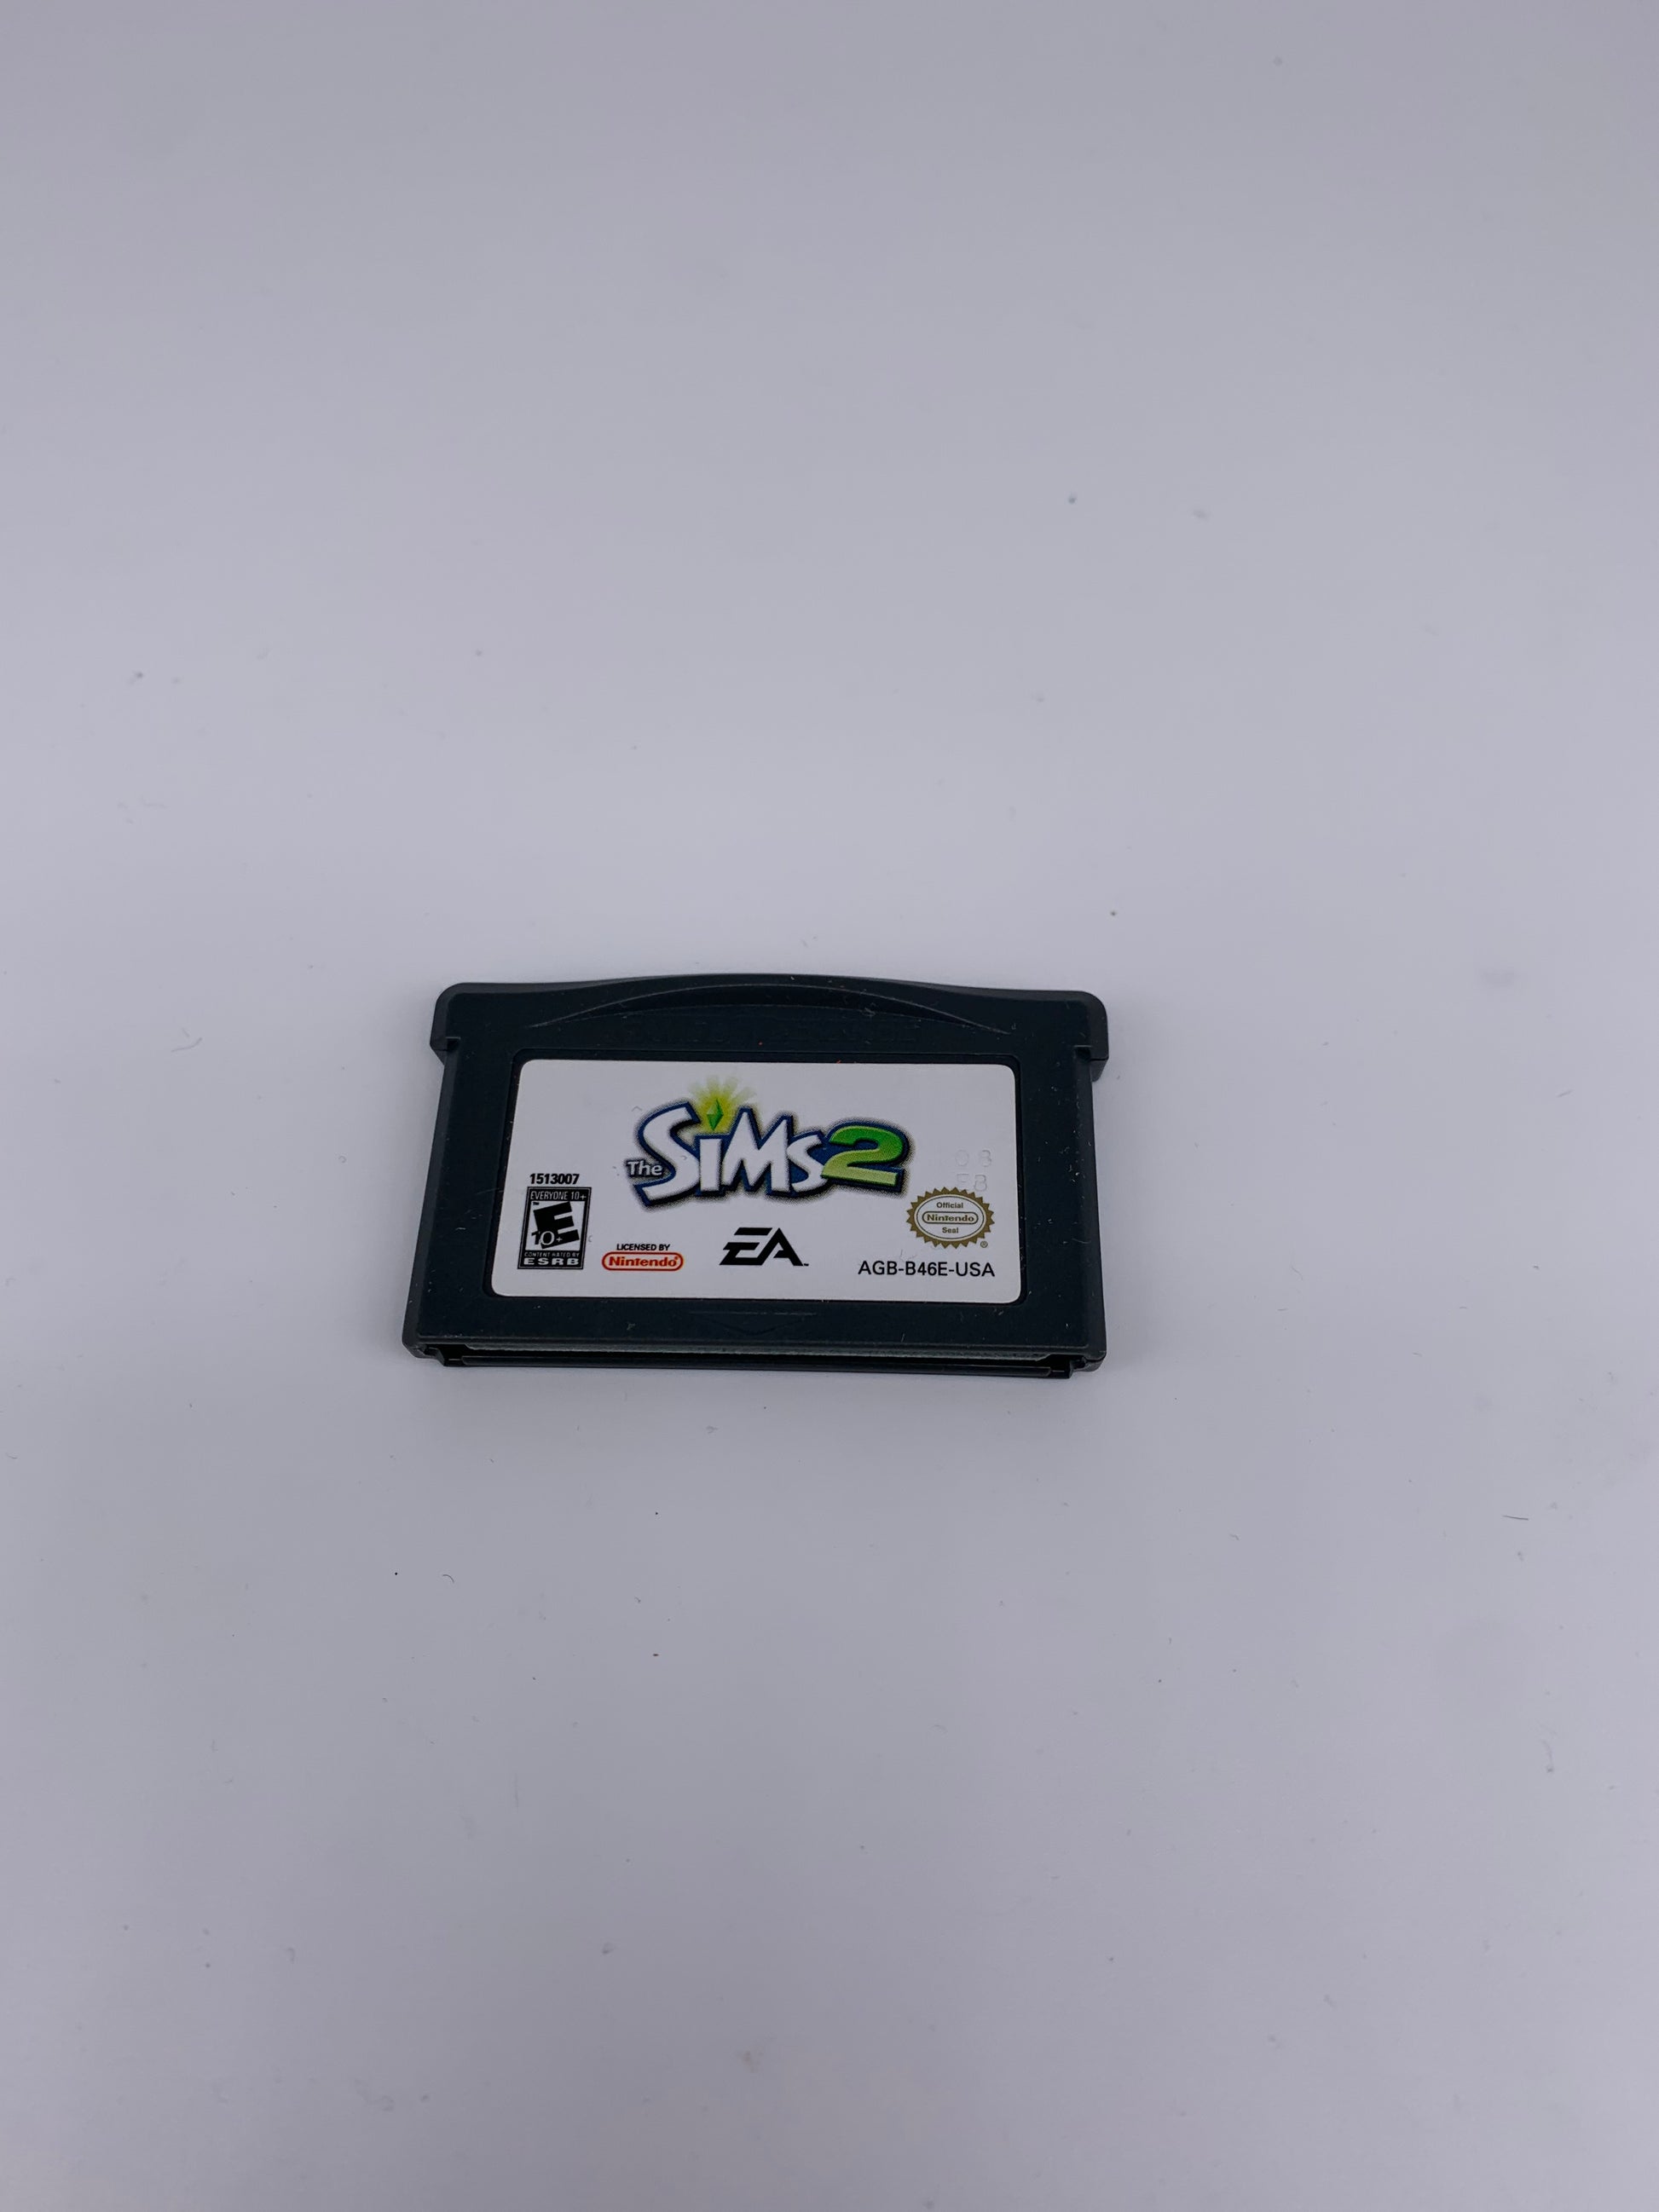 PiXEL-RETRO.COM : GAME BOY ADVANCE (GBA) GAME NTSC THE SIMS 2